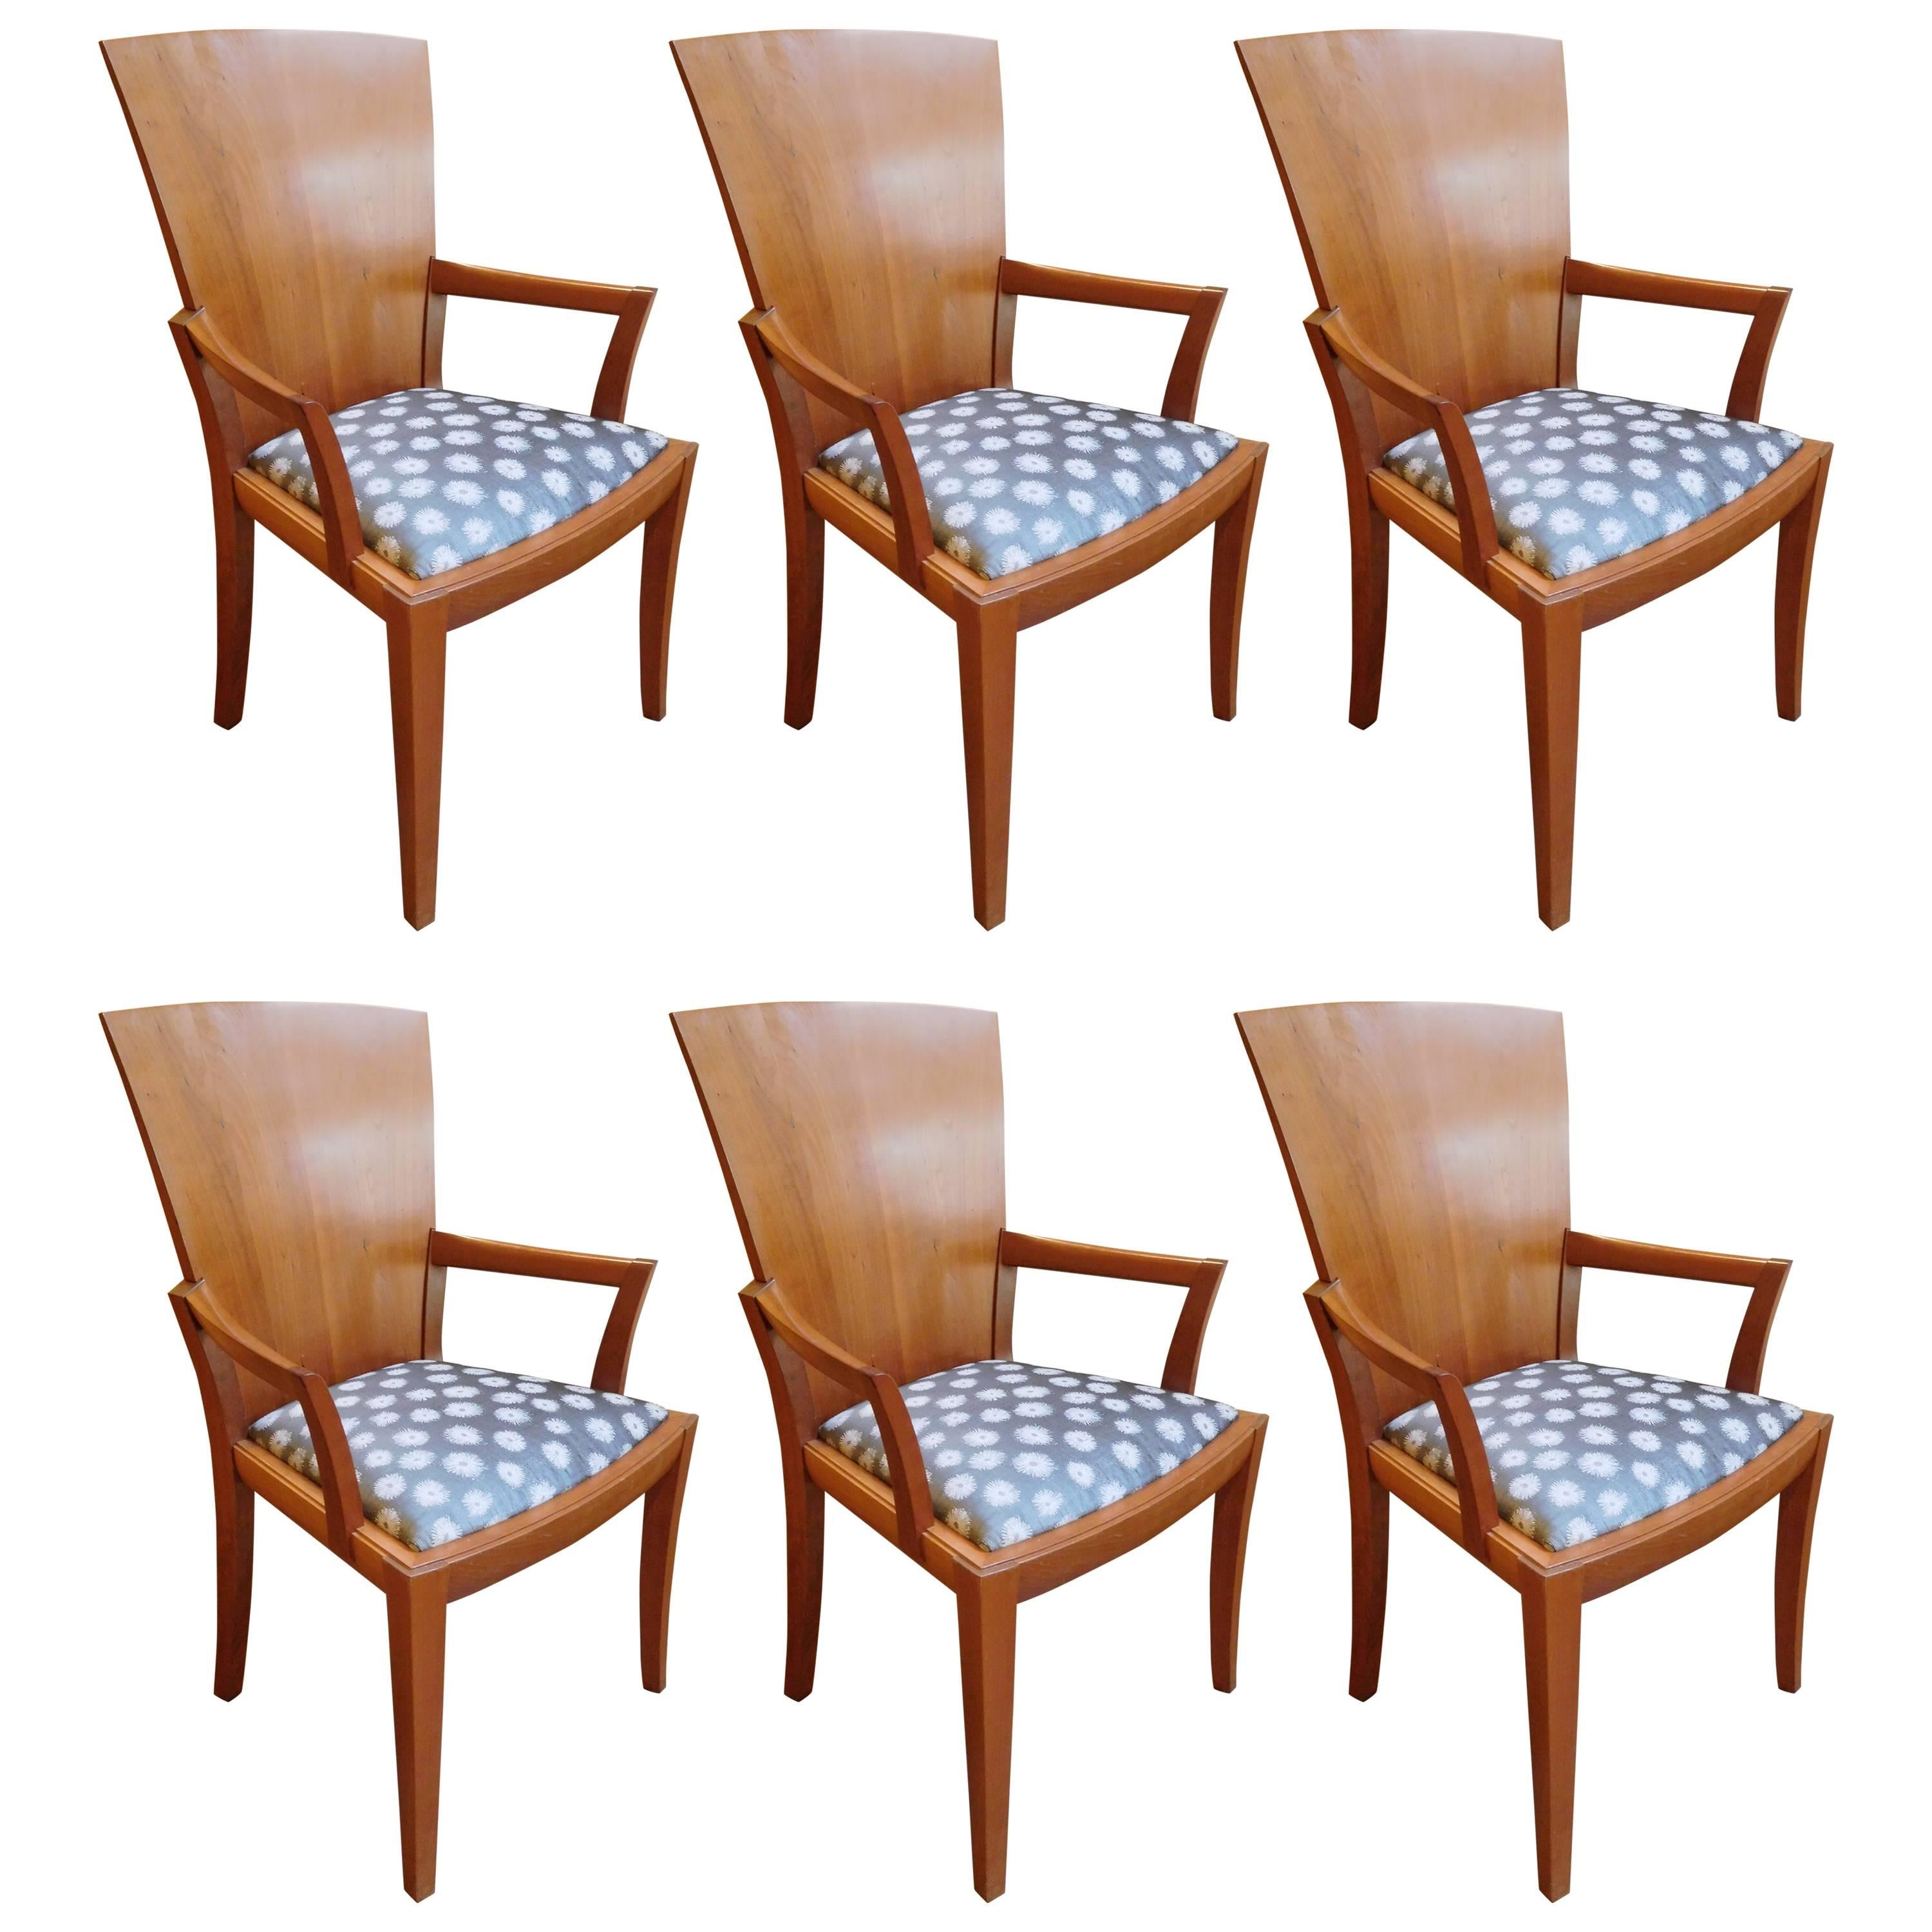 Six William Walker Modern Fan Back Dining Room Chairs, circa 1992